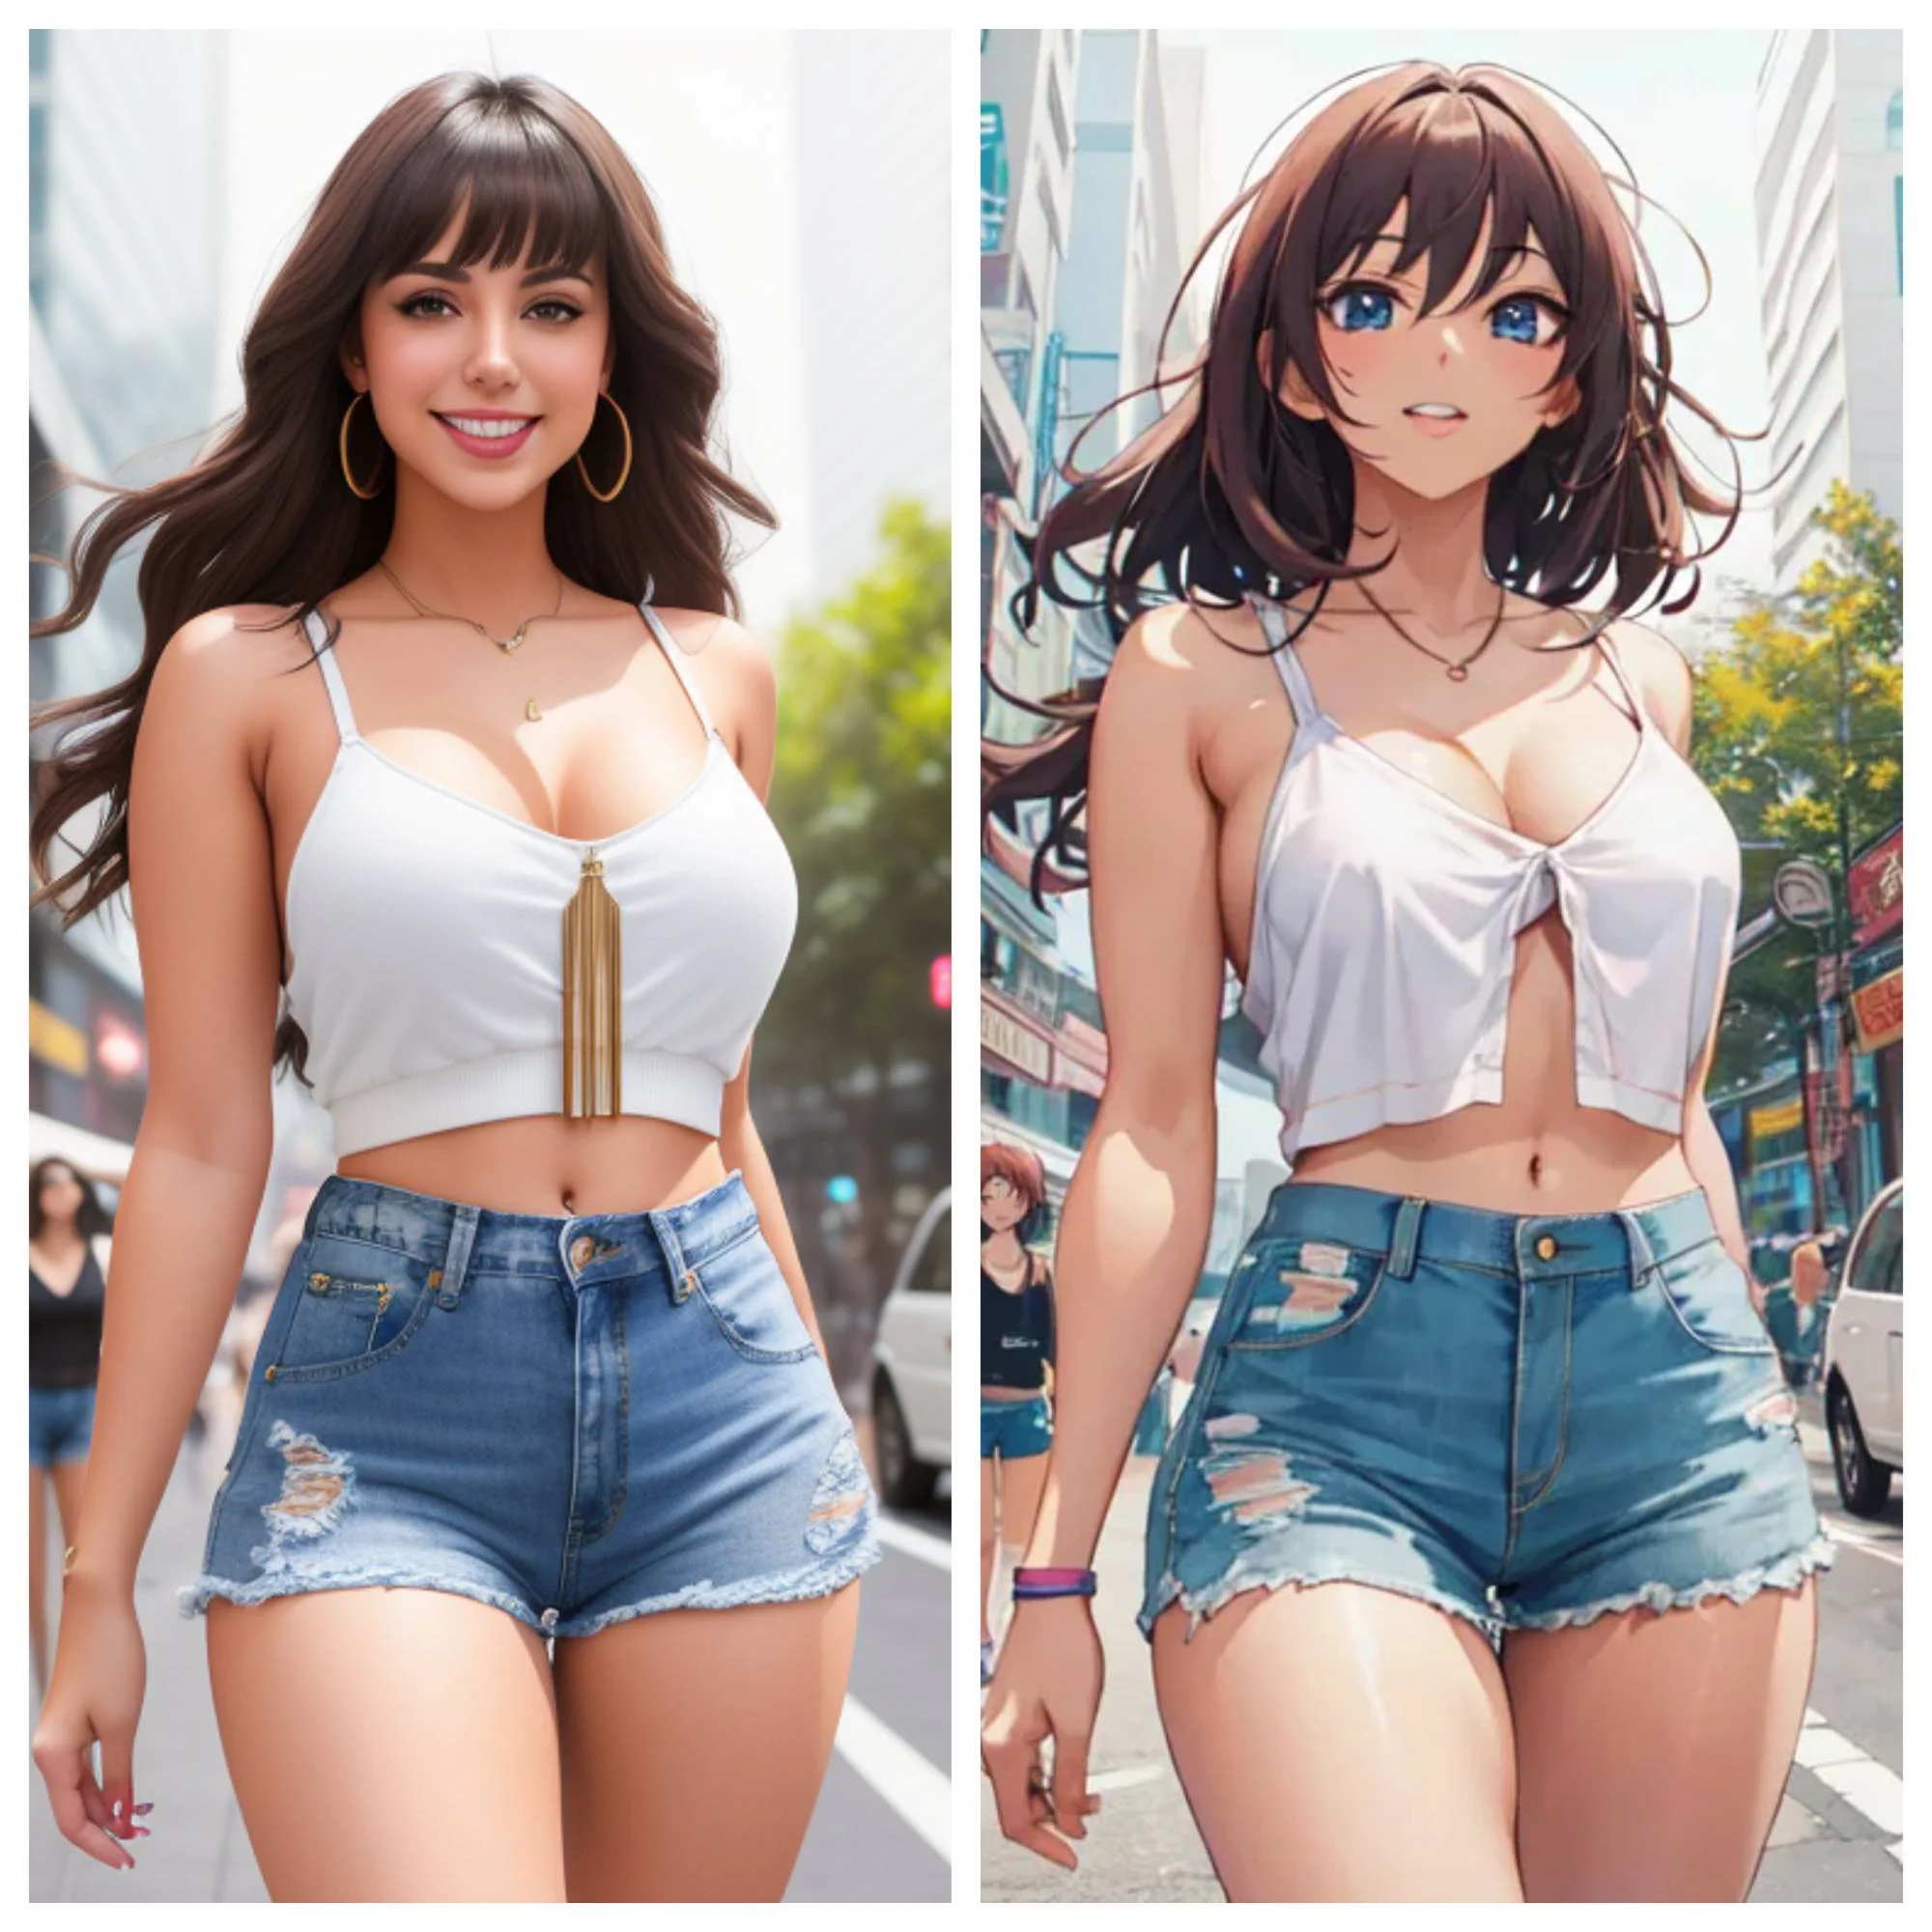 AI Realistic image to anime image